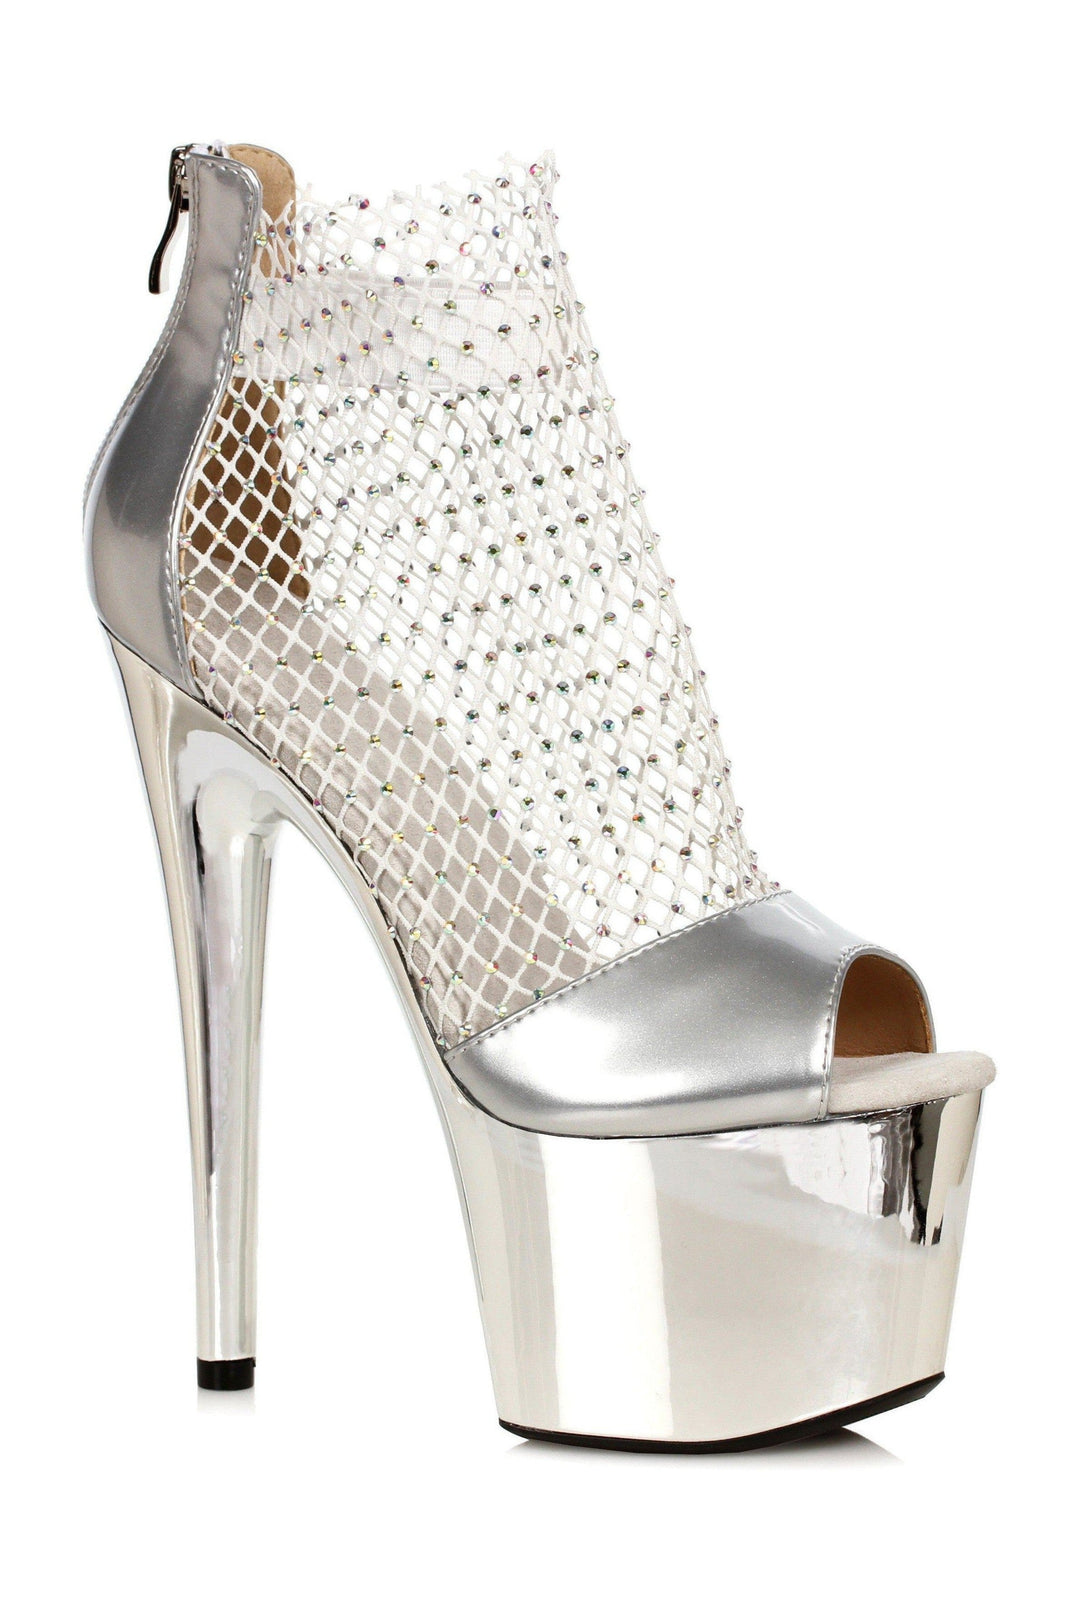 Ellie Shoes Silver Ankle Boots Platform Stripper Shoes | Buy at Sexyshoes.com